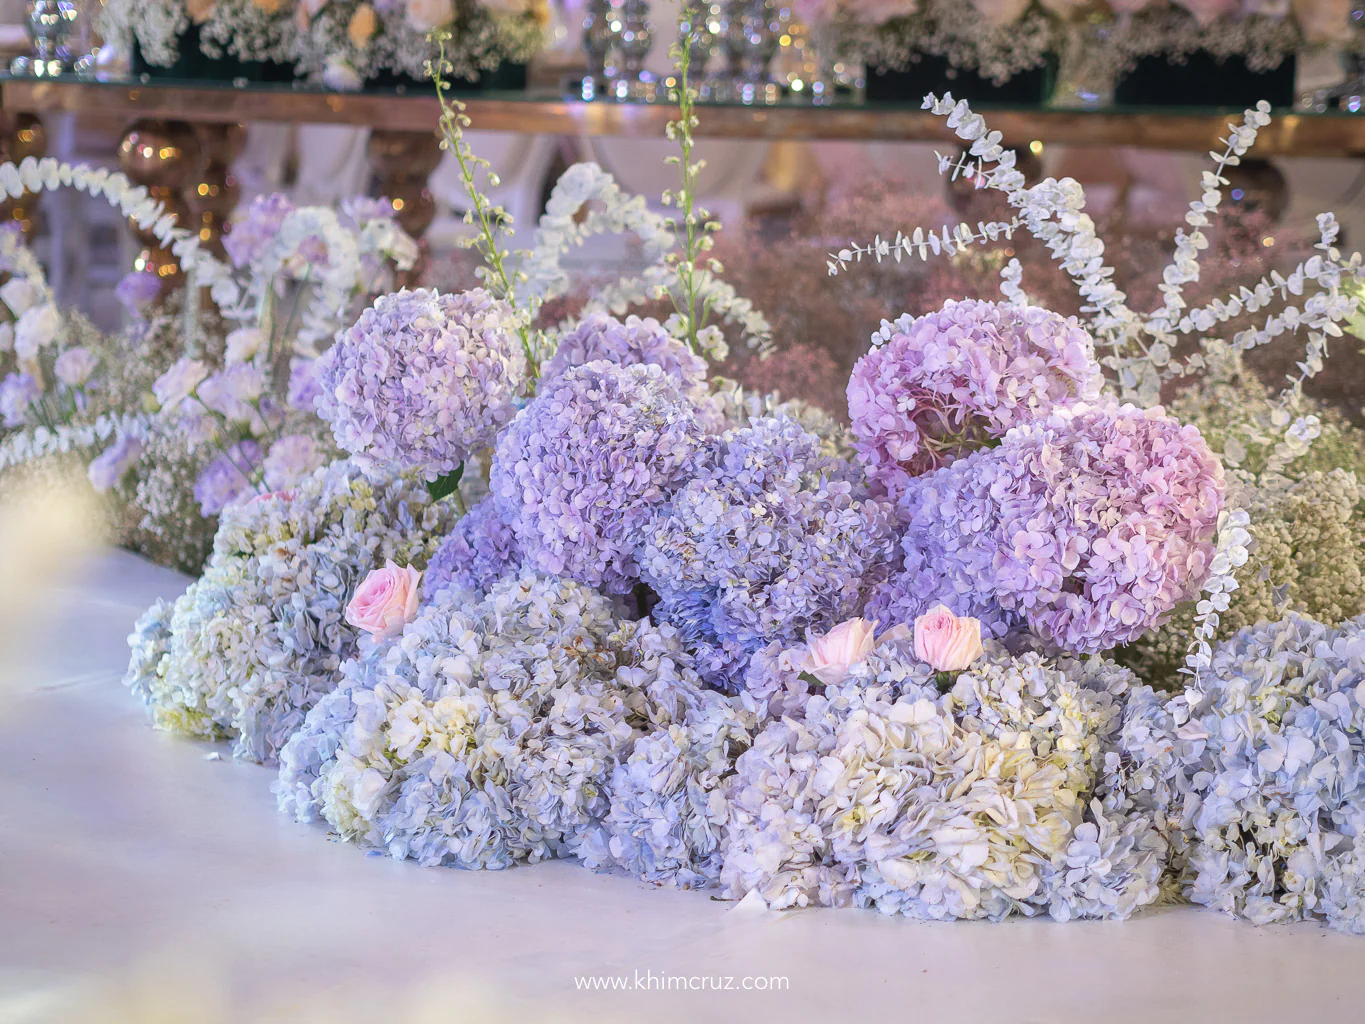 beautiful aisle floral details for a dreamy garden theme wedding reception